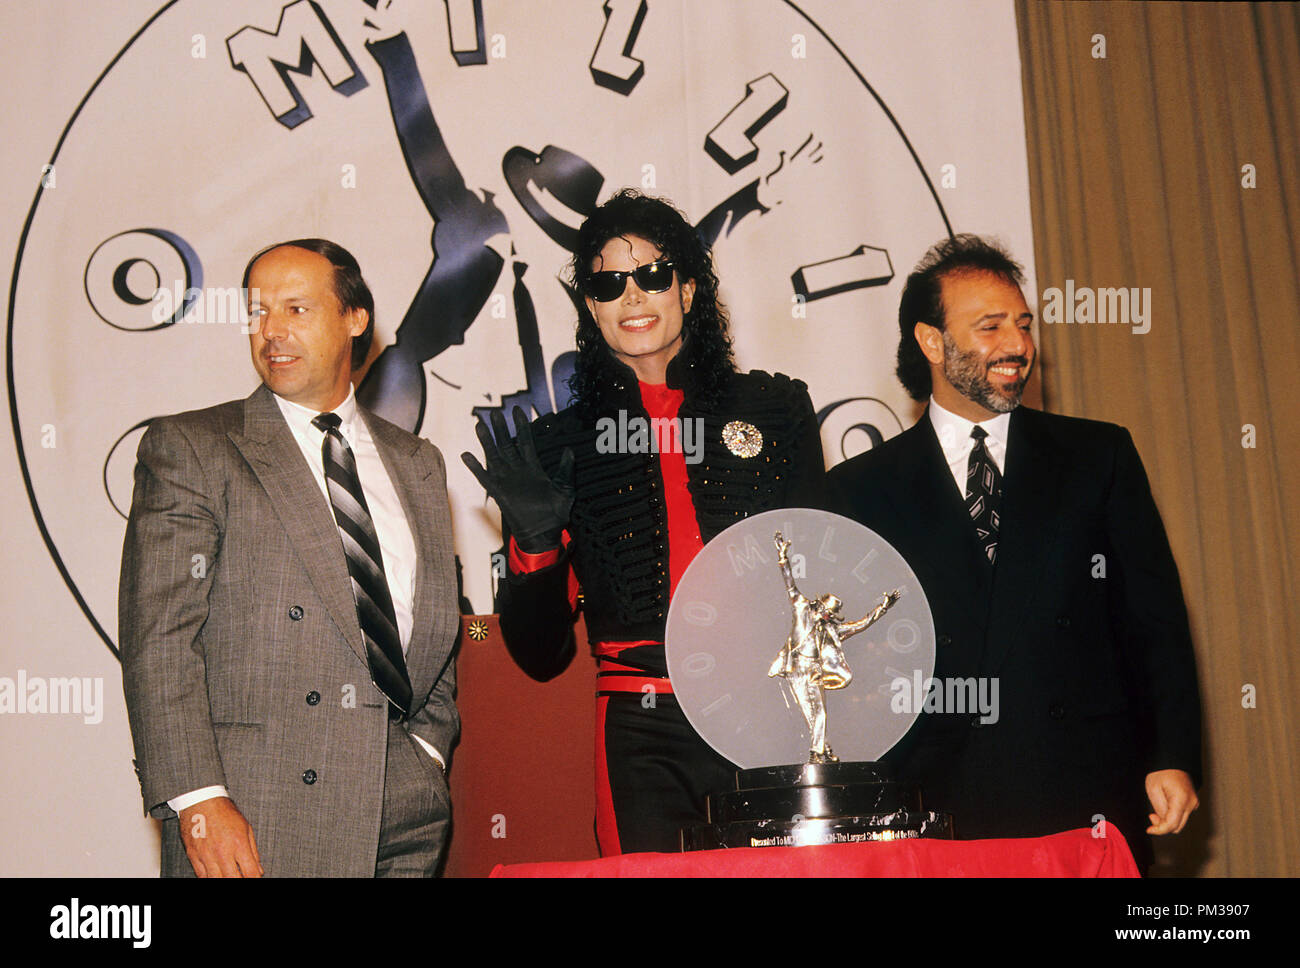 Michael Jackson, febbraio 1990. Riferimento al file # 1255 003CCR Foto Stock